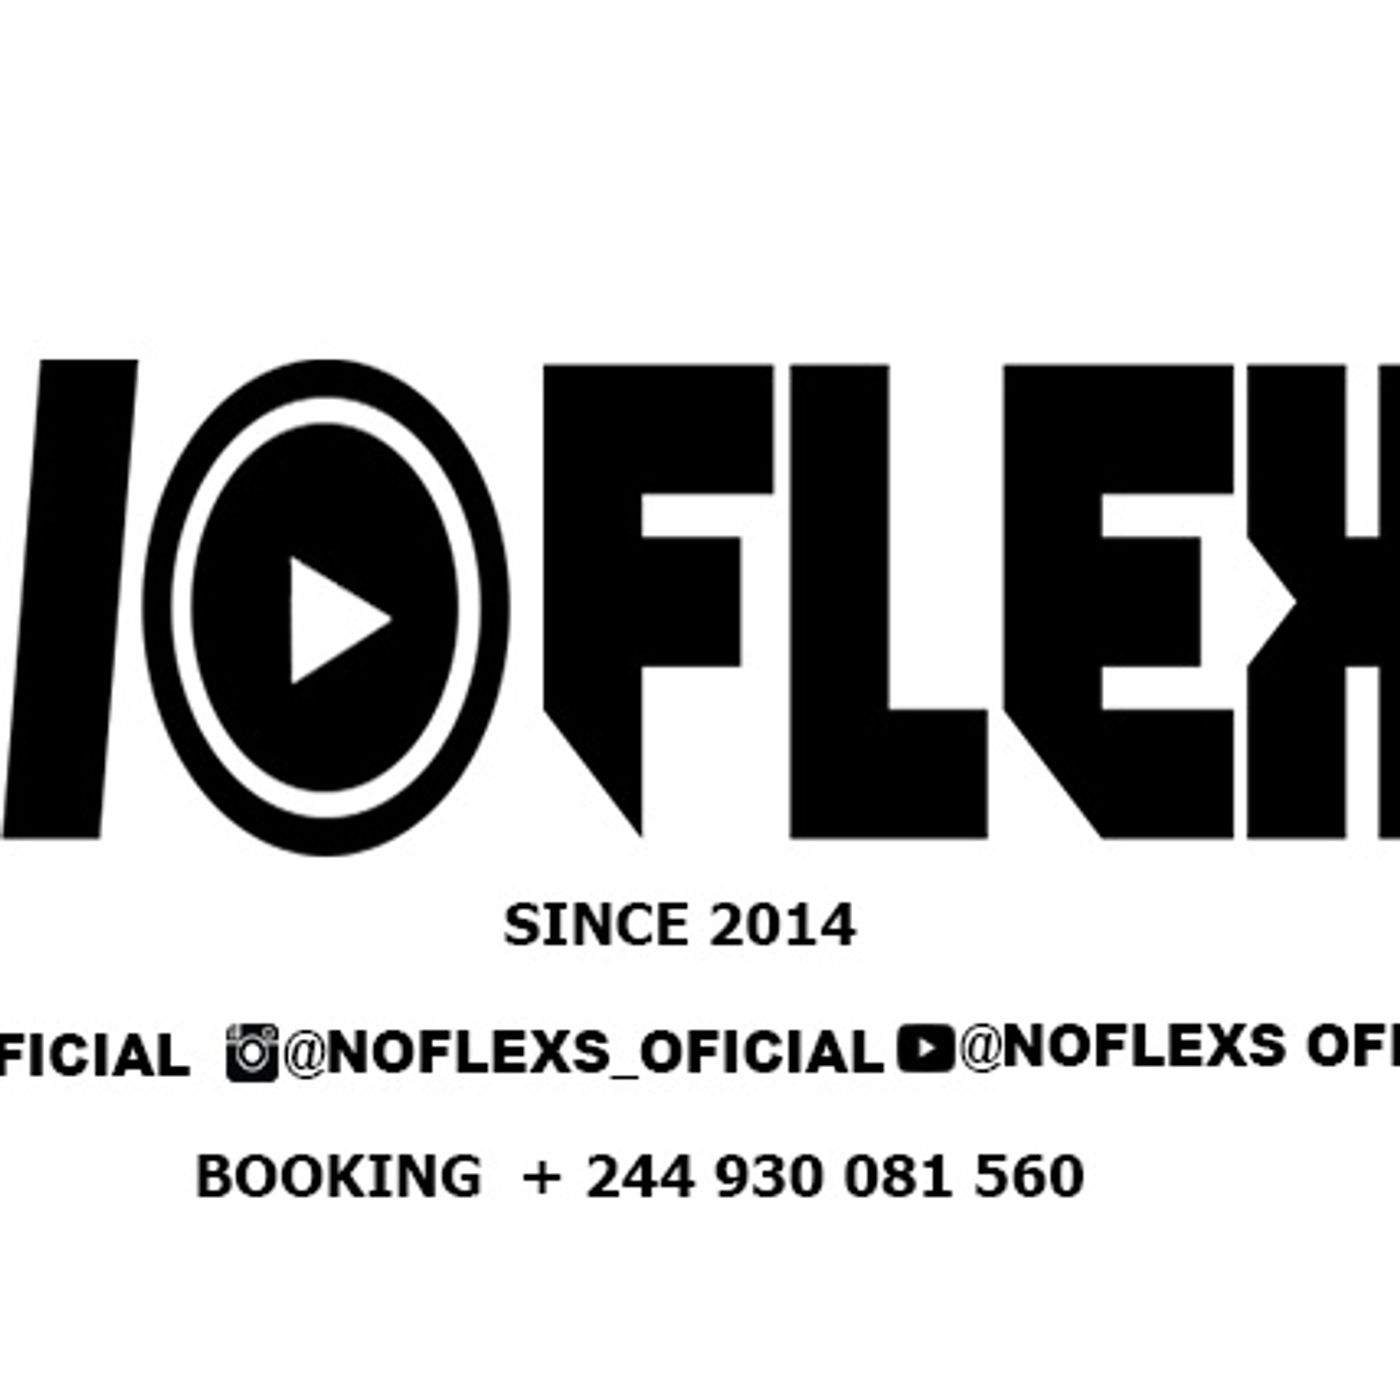 Noflexs